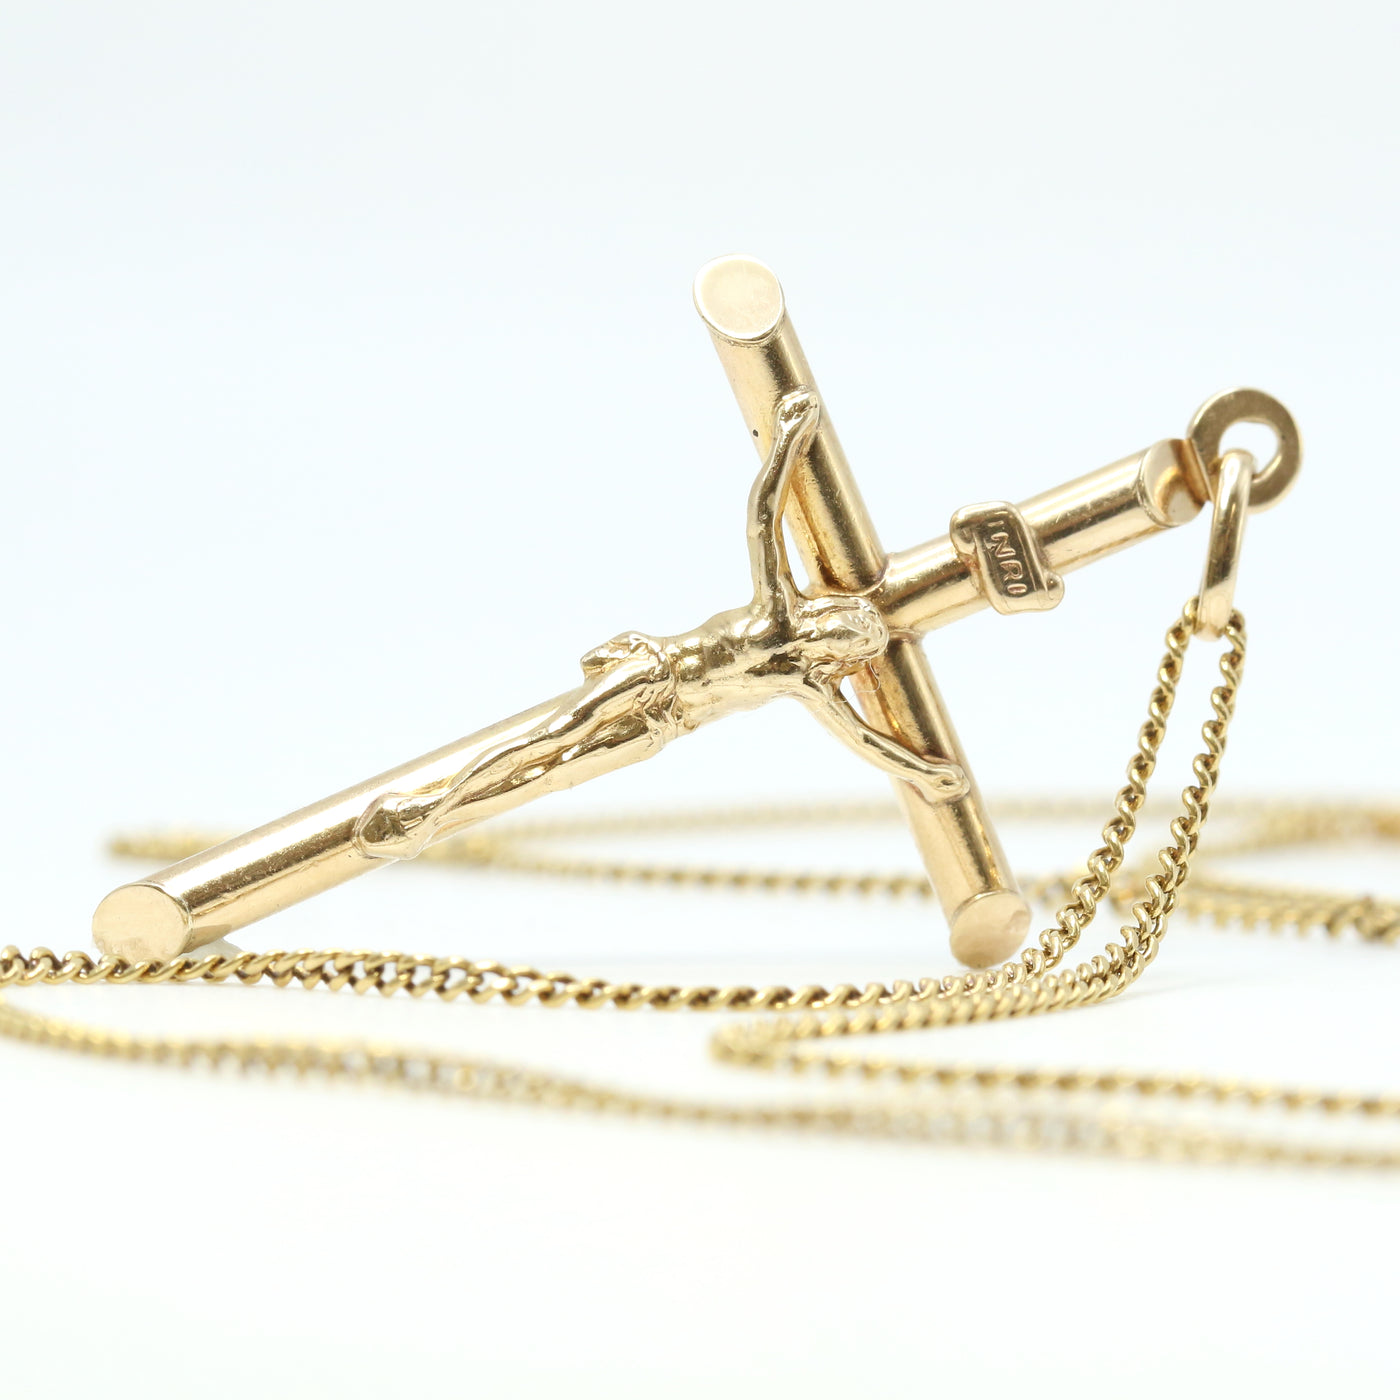 Crucifix and Chain